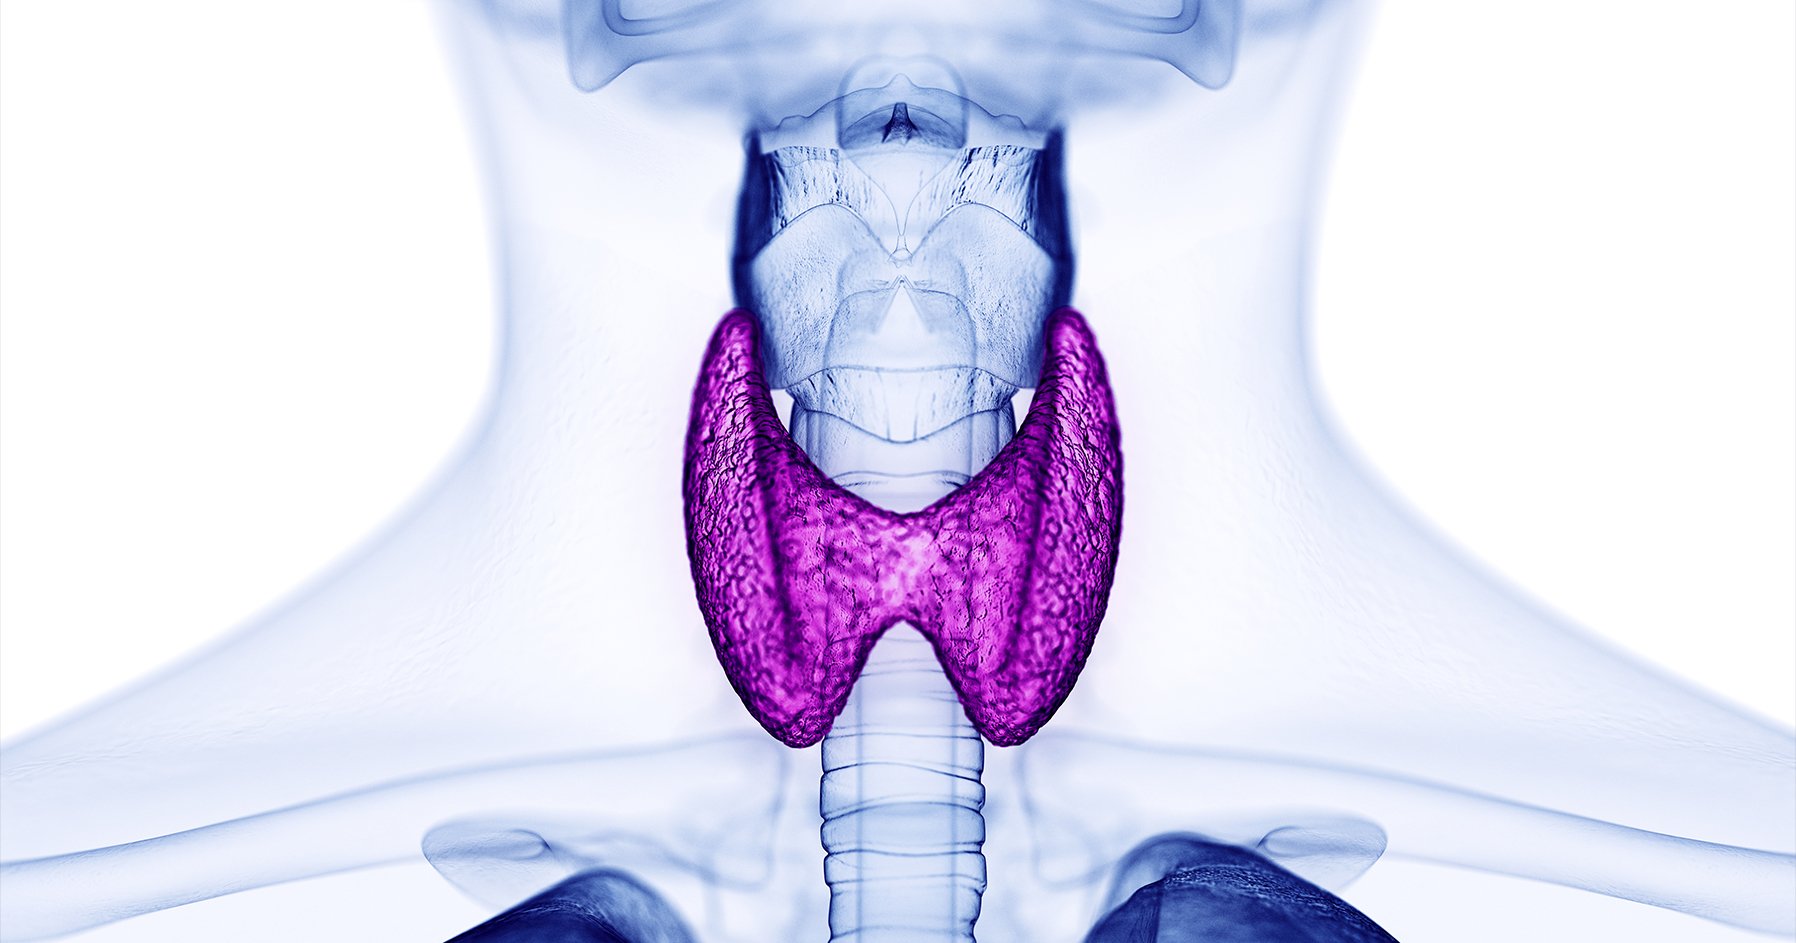 Image of thyroid gland responsible for hyperthyroidism.